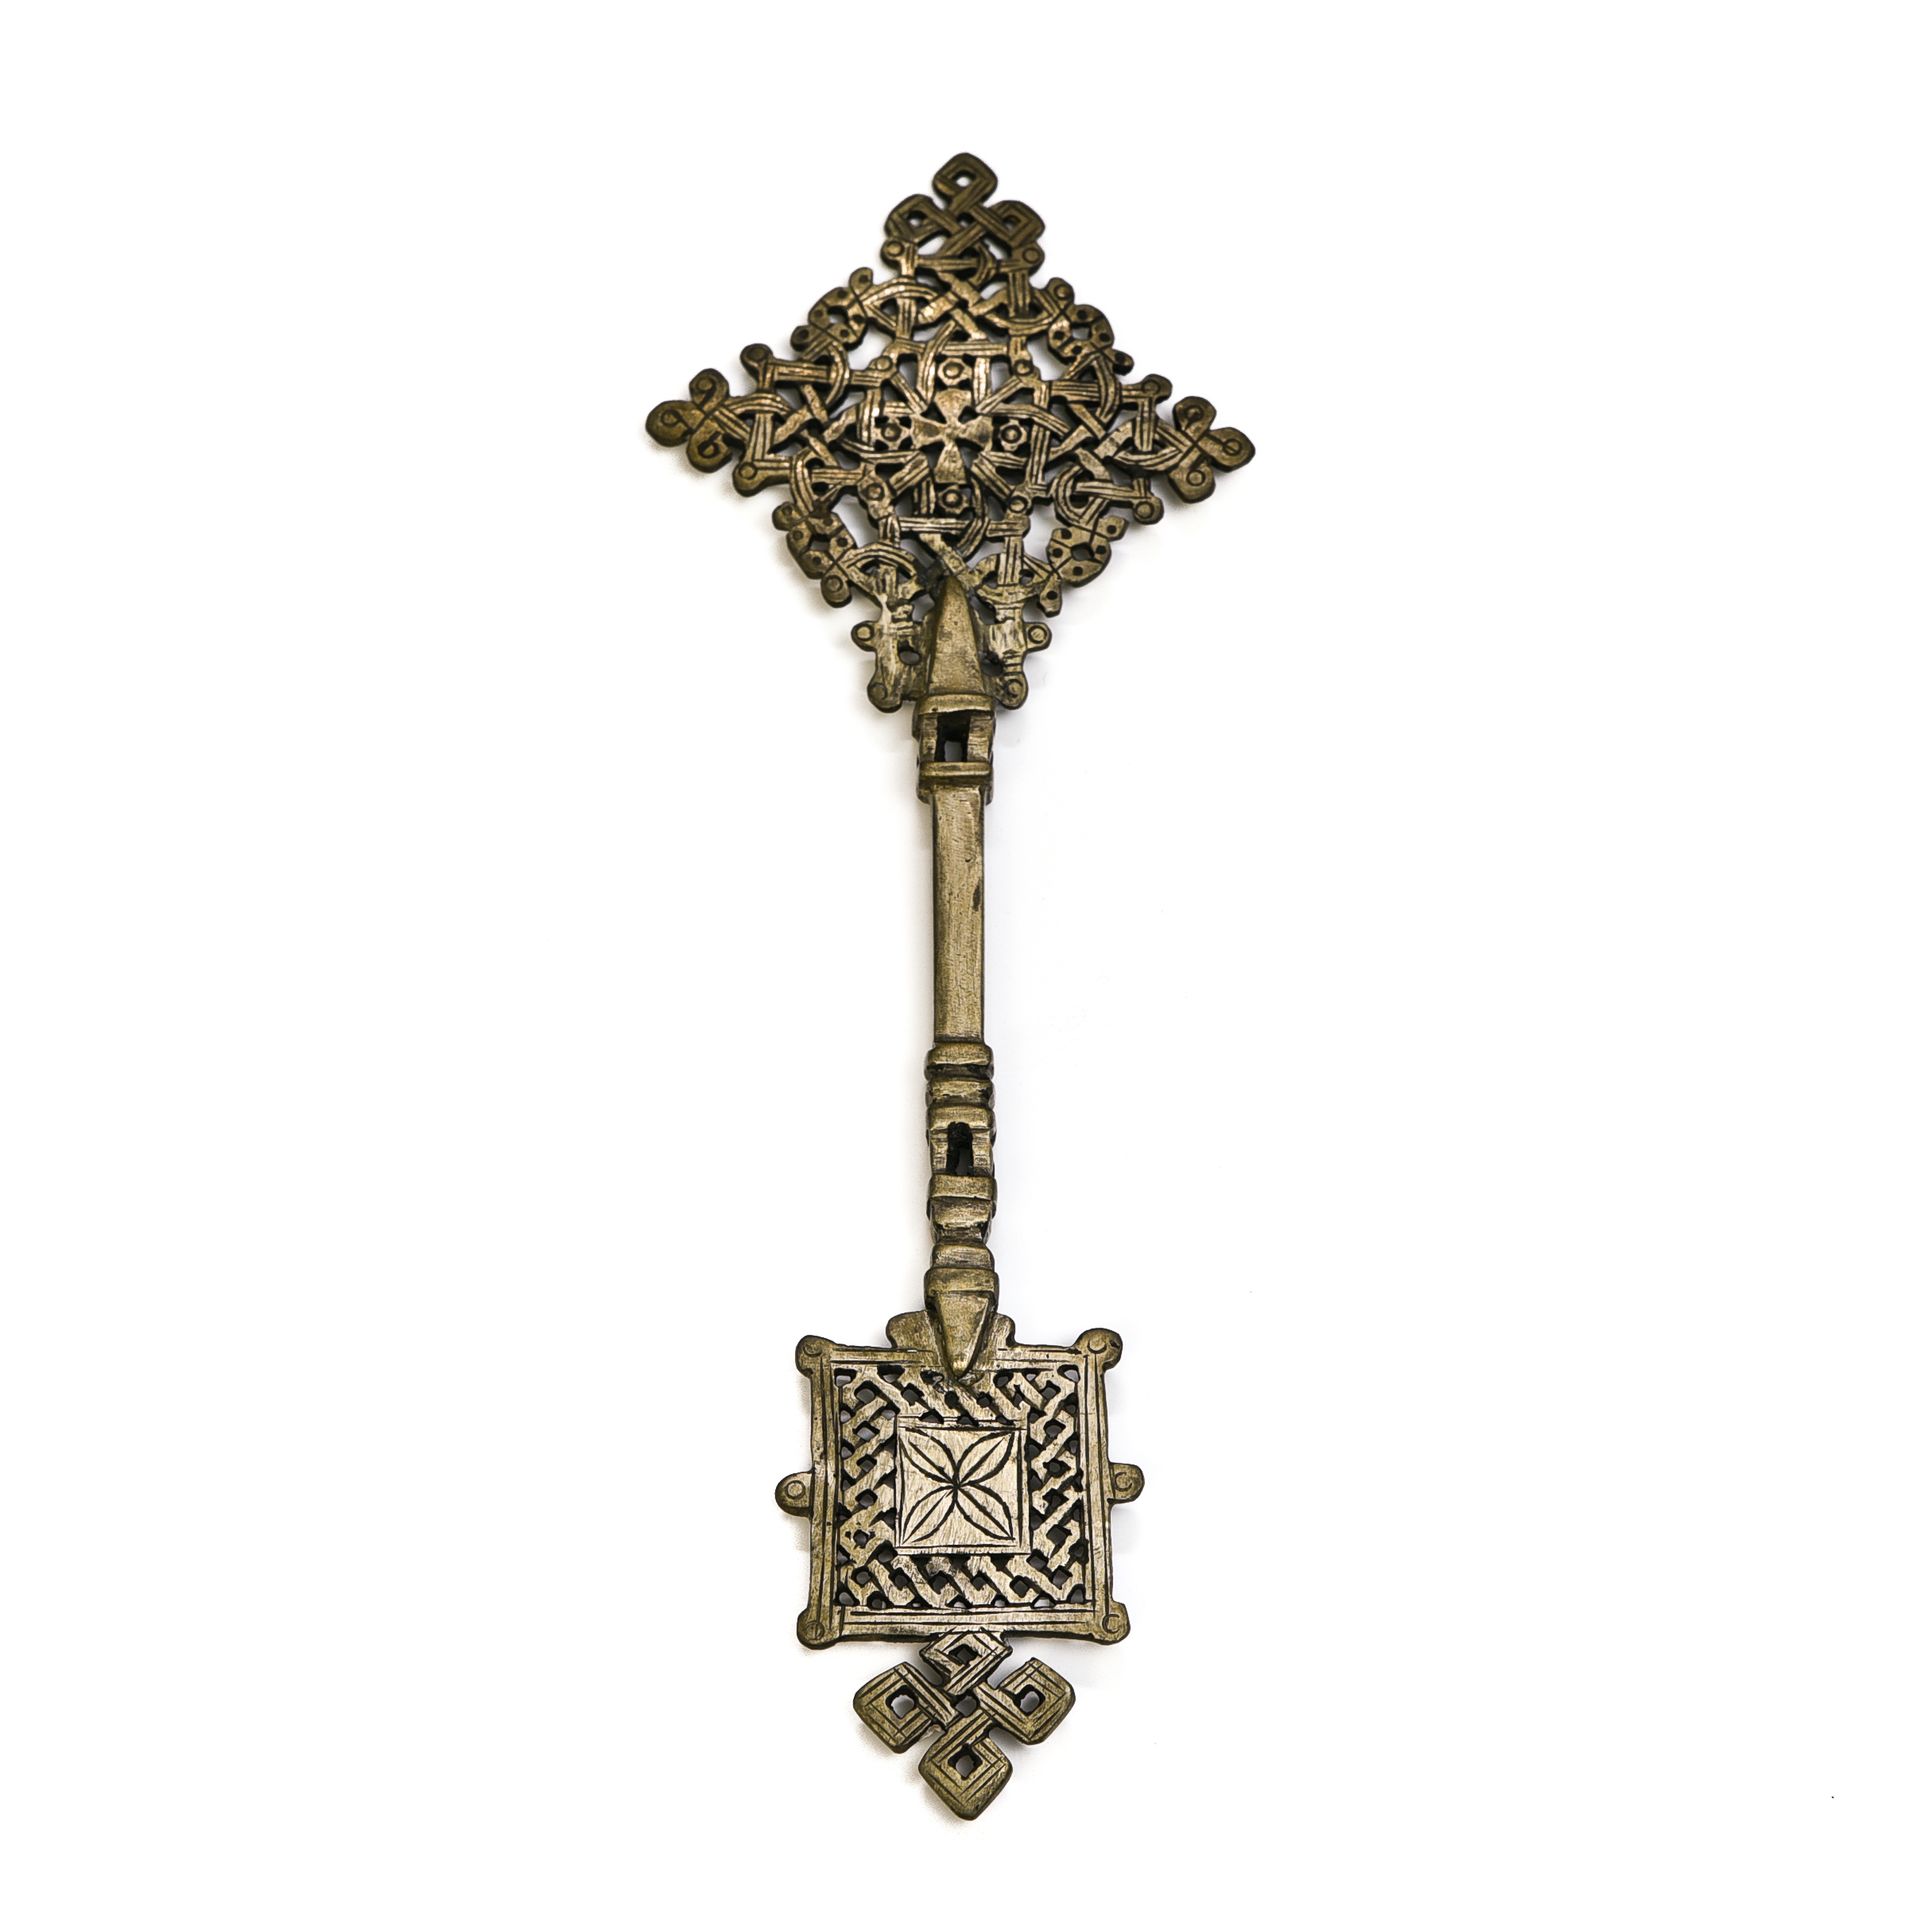 Croix copte de procession 埃塞俄比亚，约1900年

科普特人的游行十字架



镀银铜制

 高：30.5厘米，宽：10.5厘米